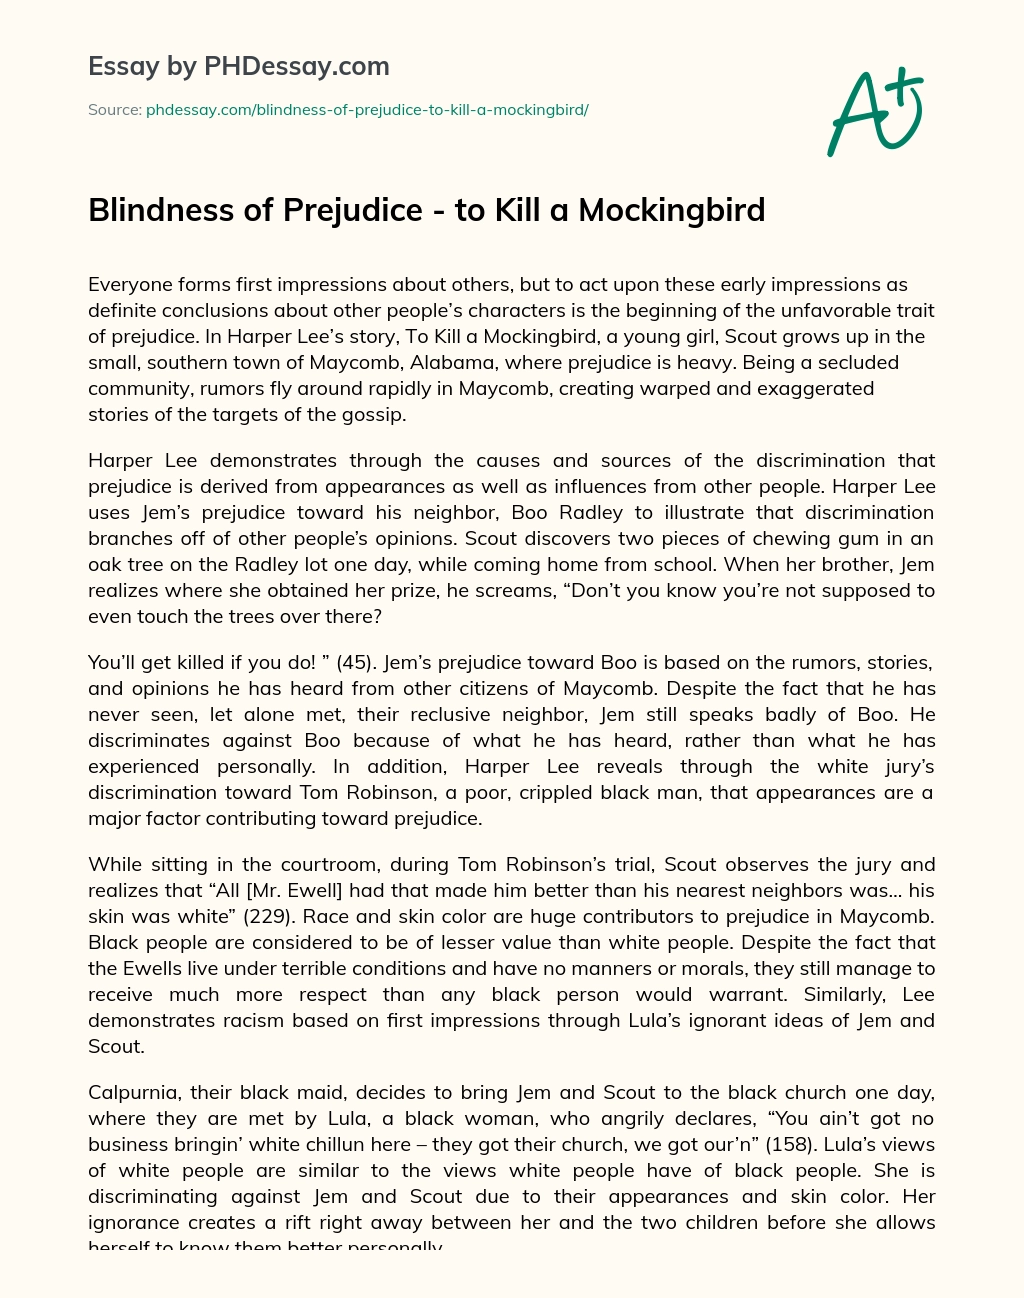 Blindness of Prejudice – to Kill a Mockingbird essay